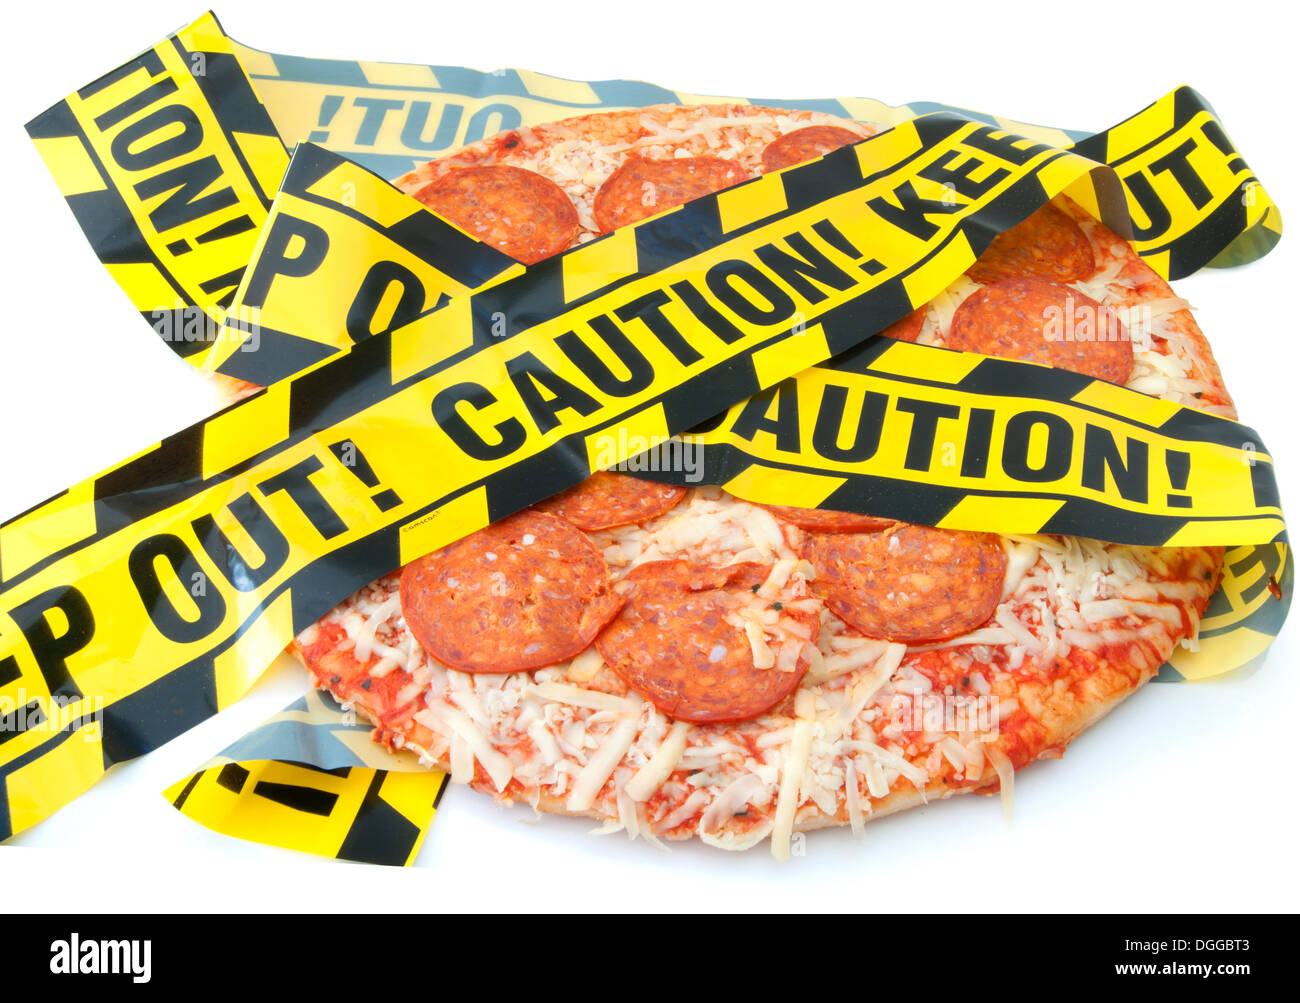 Unhealthy food caution Stock Photo